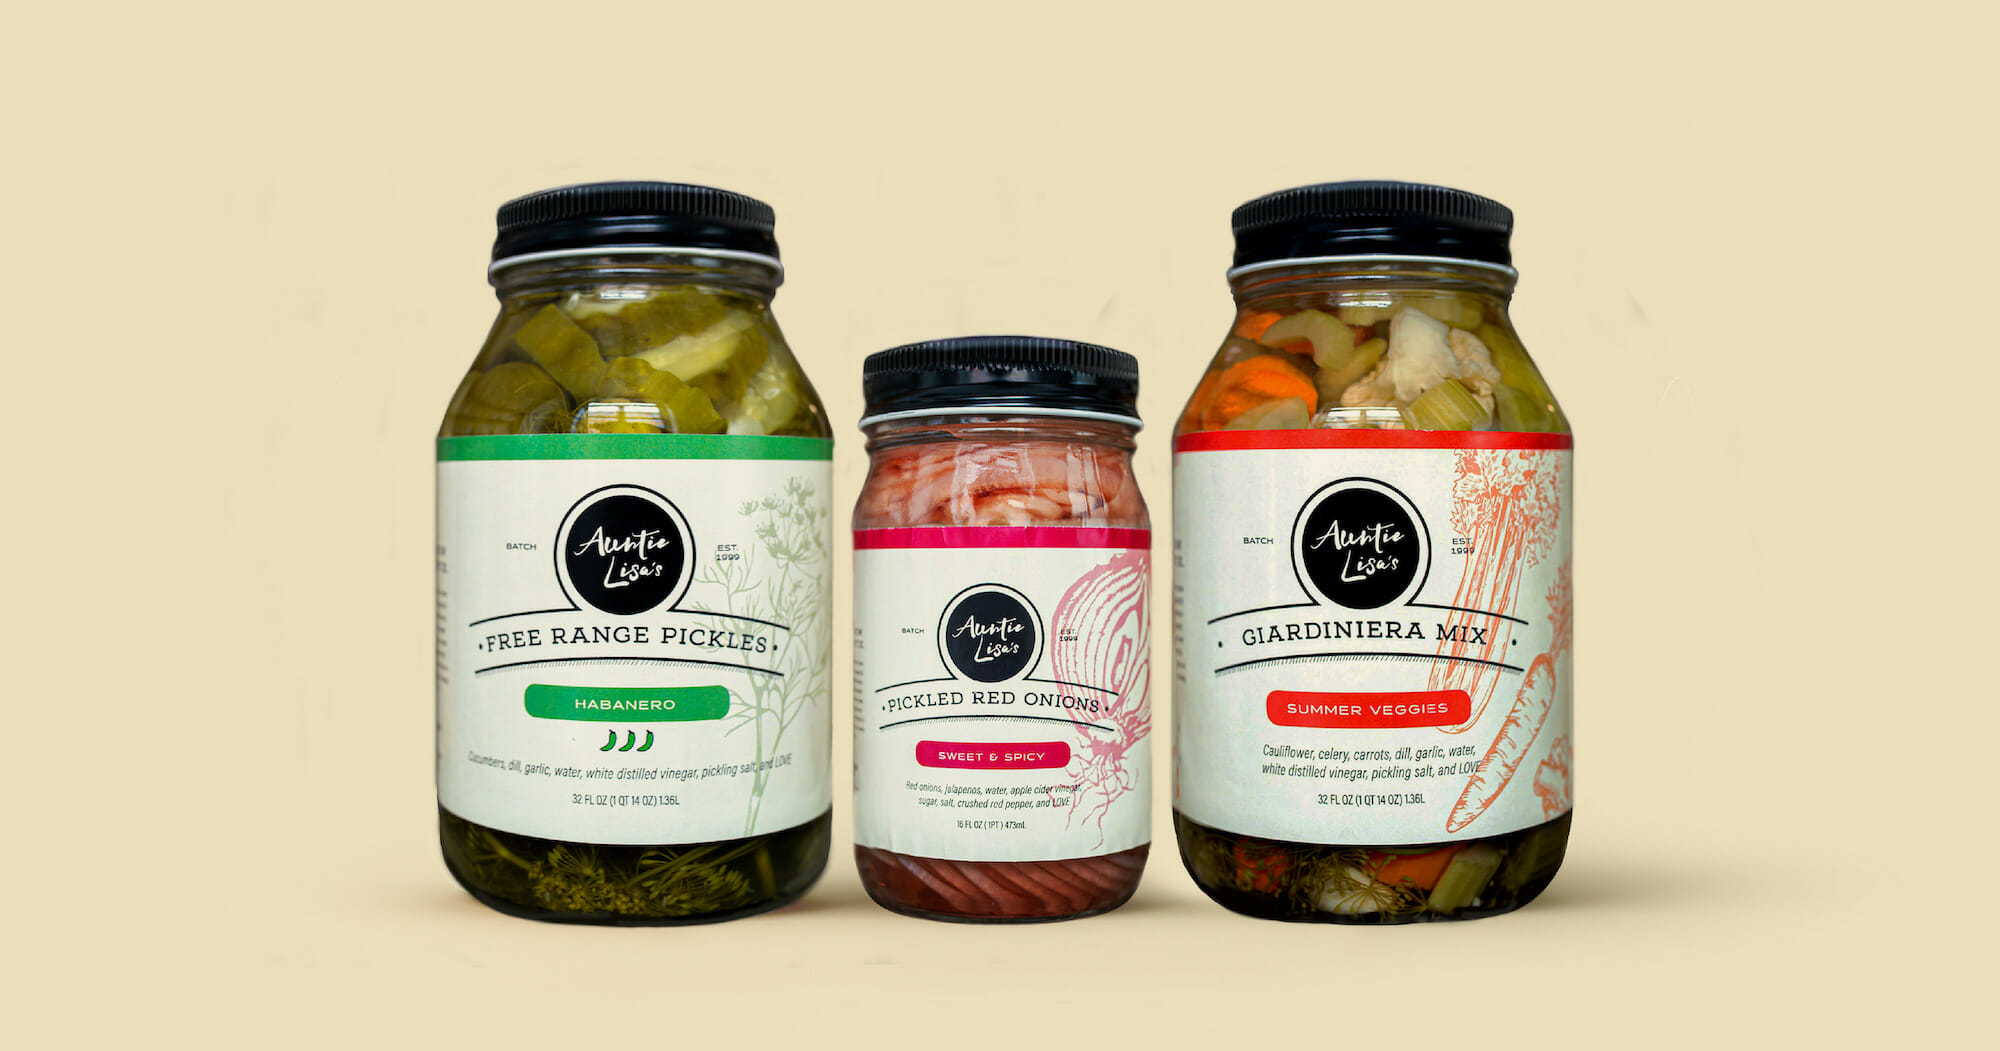 Auntie Lisa's free range pickles, label design created by Šek Design Studio